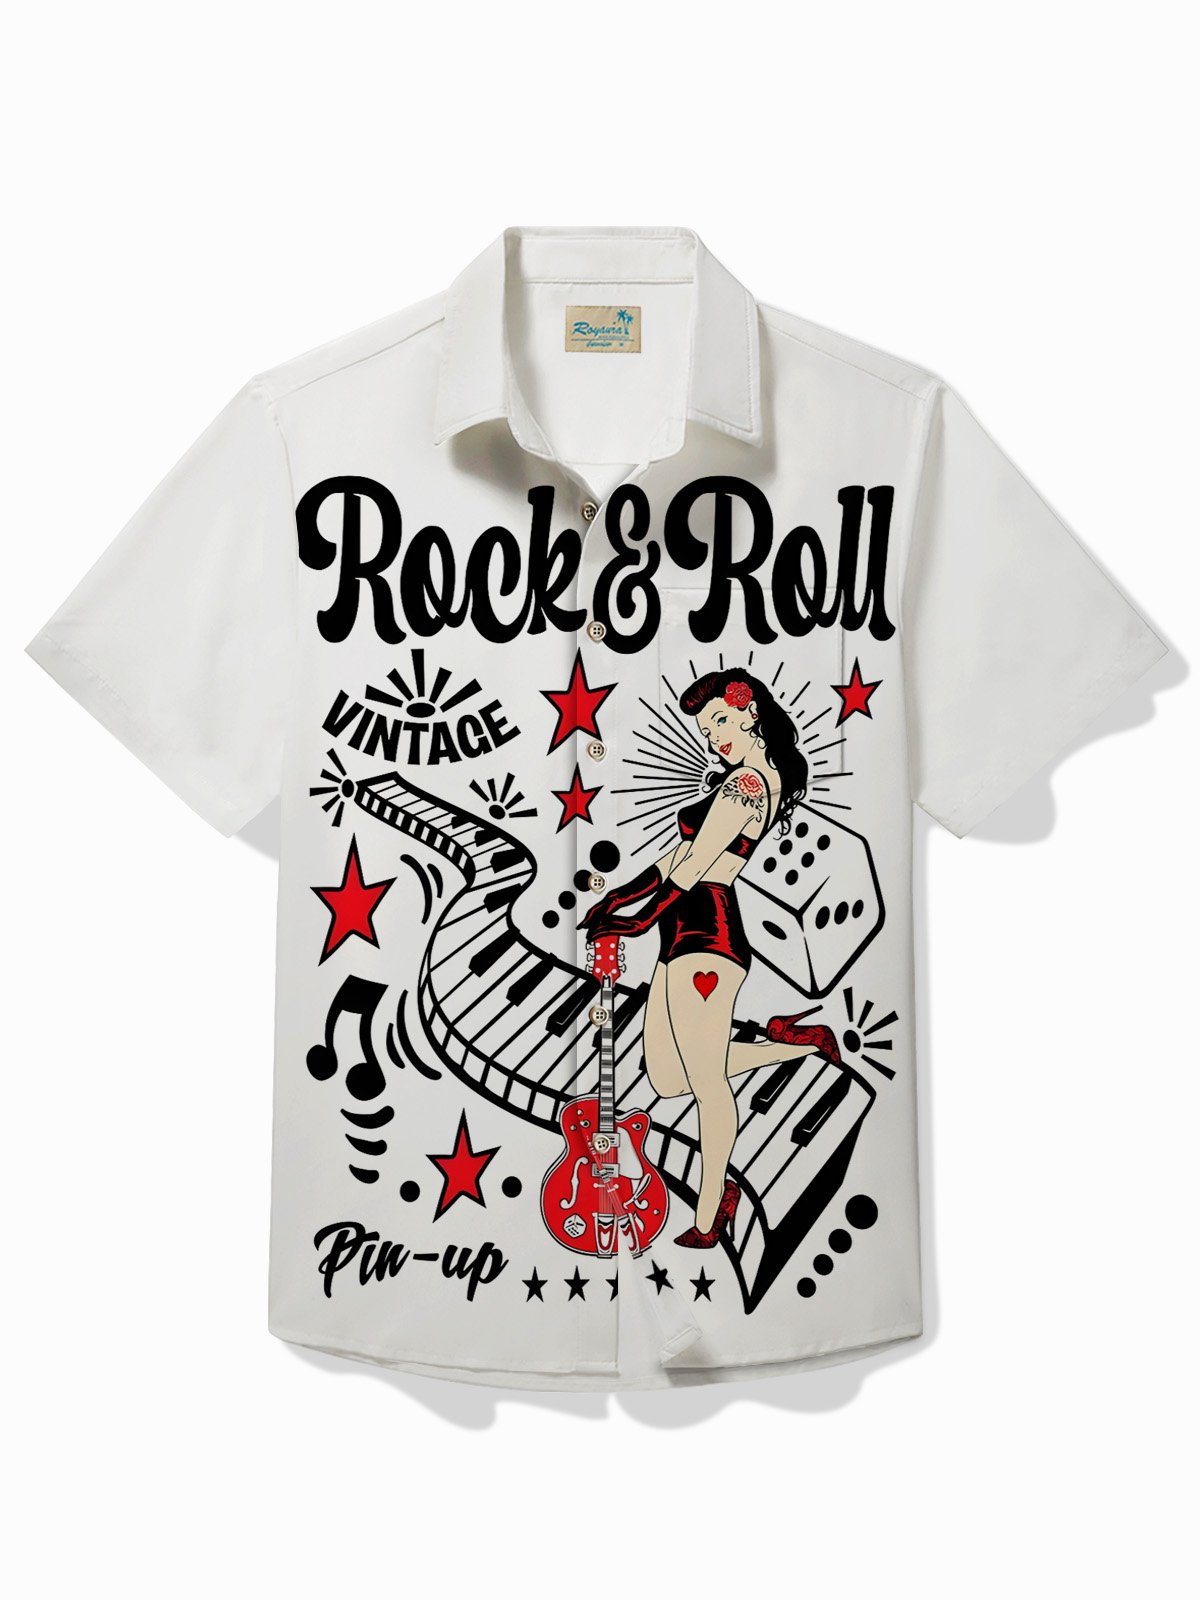 Royaura® 50's Retro Music Shirt Rock & Roll Pin Up Girl Art Wrinkle Free Seersucker Pocket Camp Shirt Big Tall